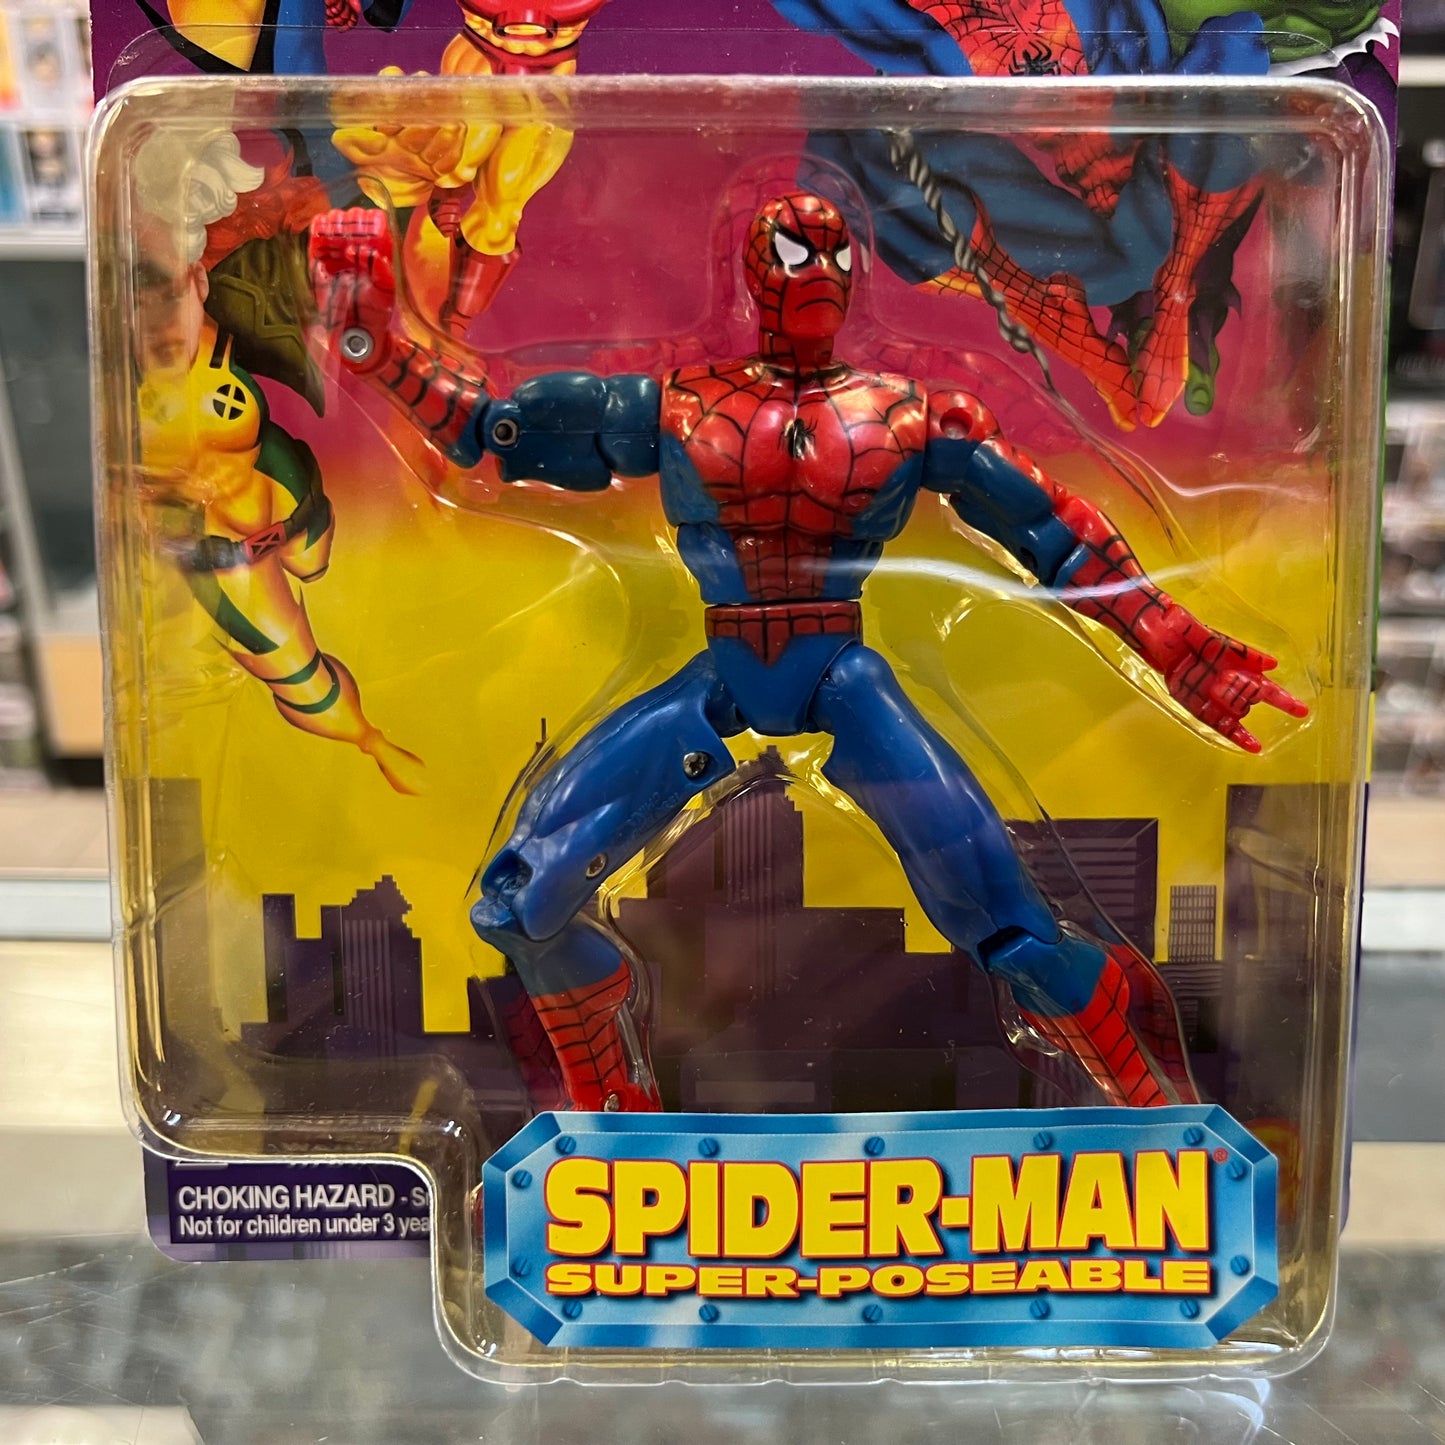 Toybiz Marvel Super Heroes - Spider-Man Super-Poseable - 1997